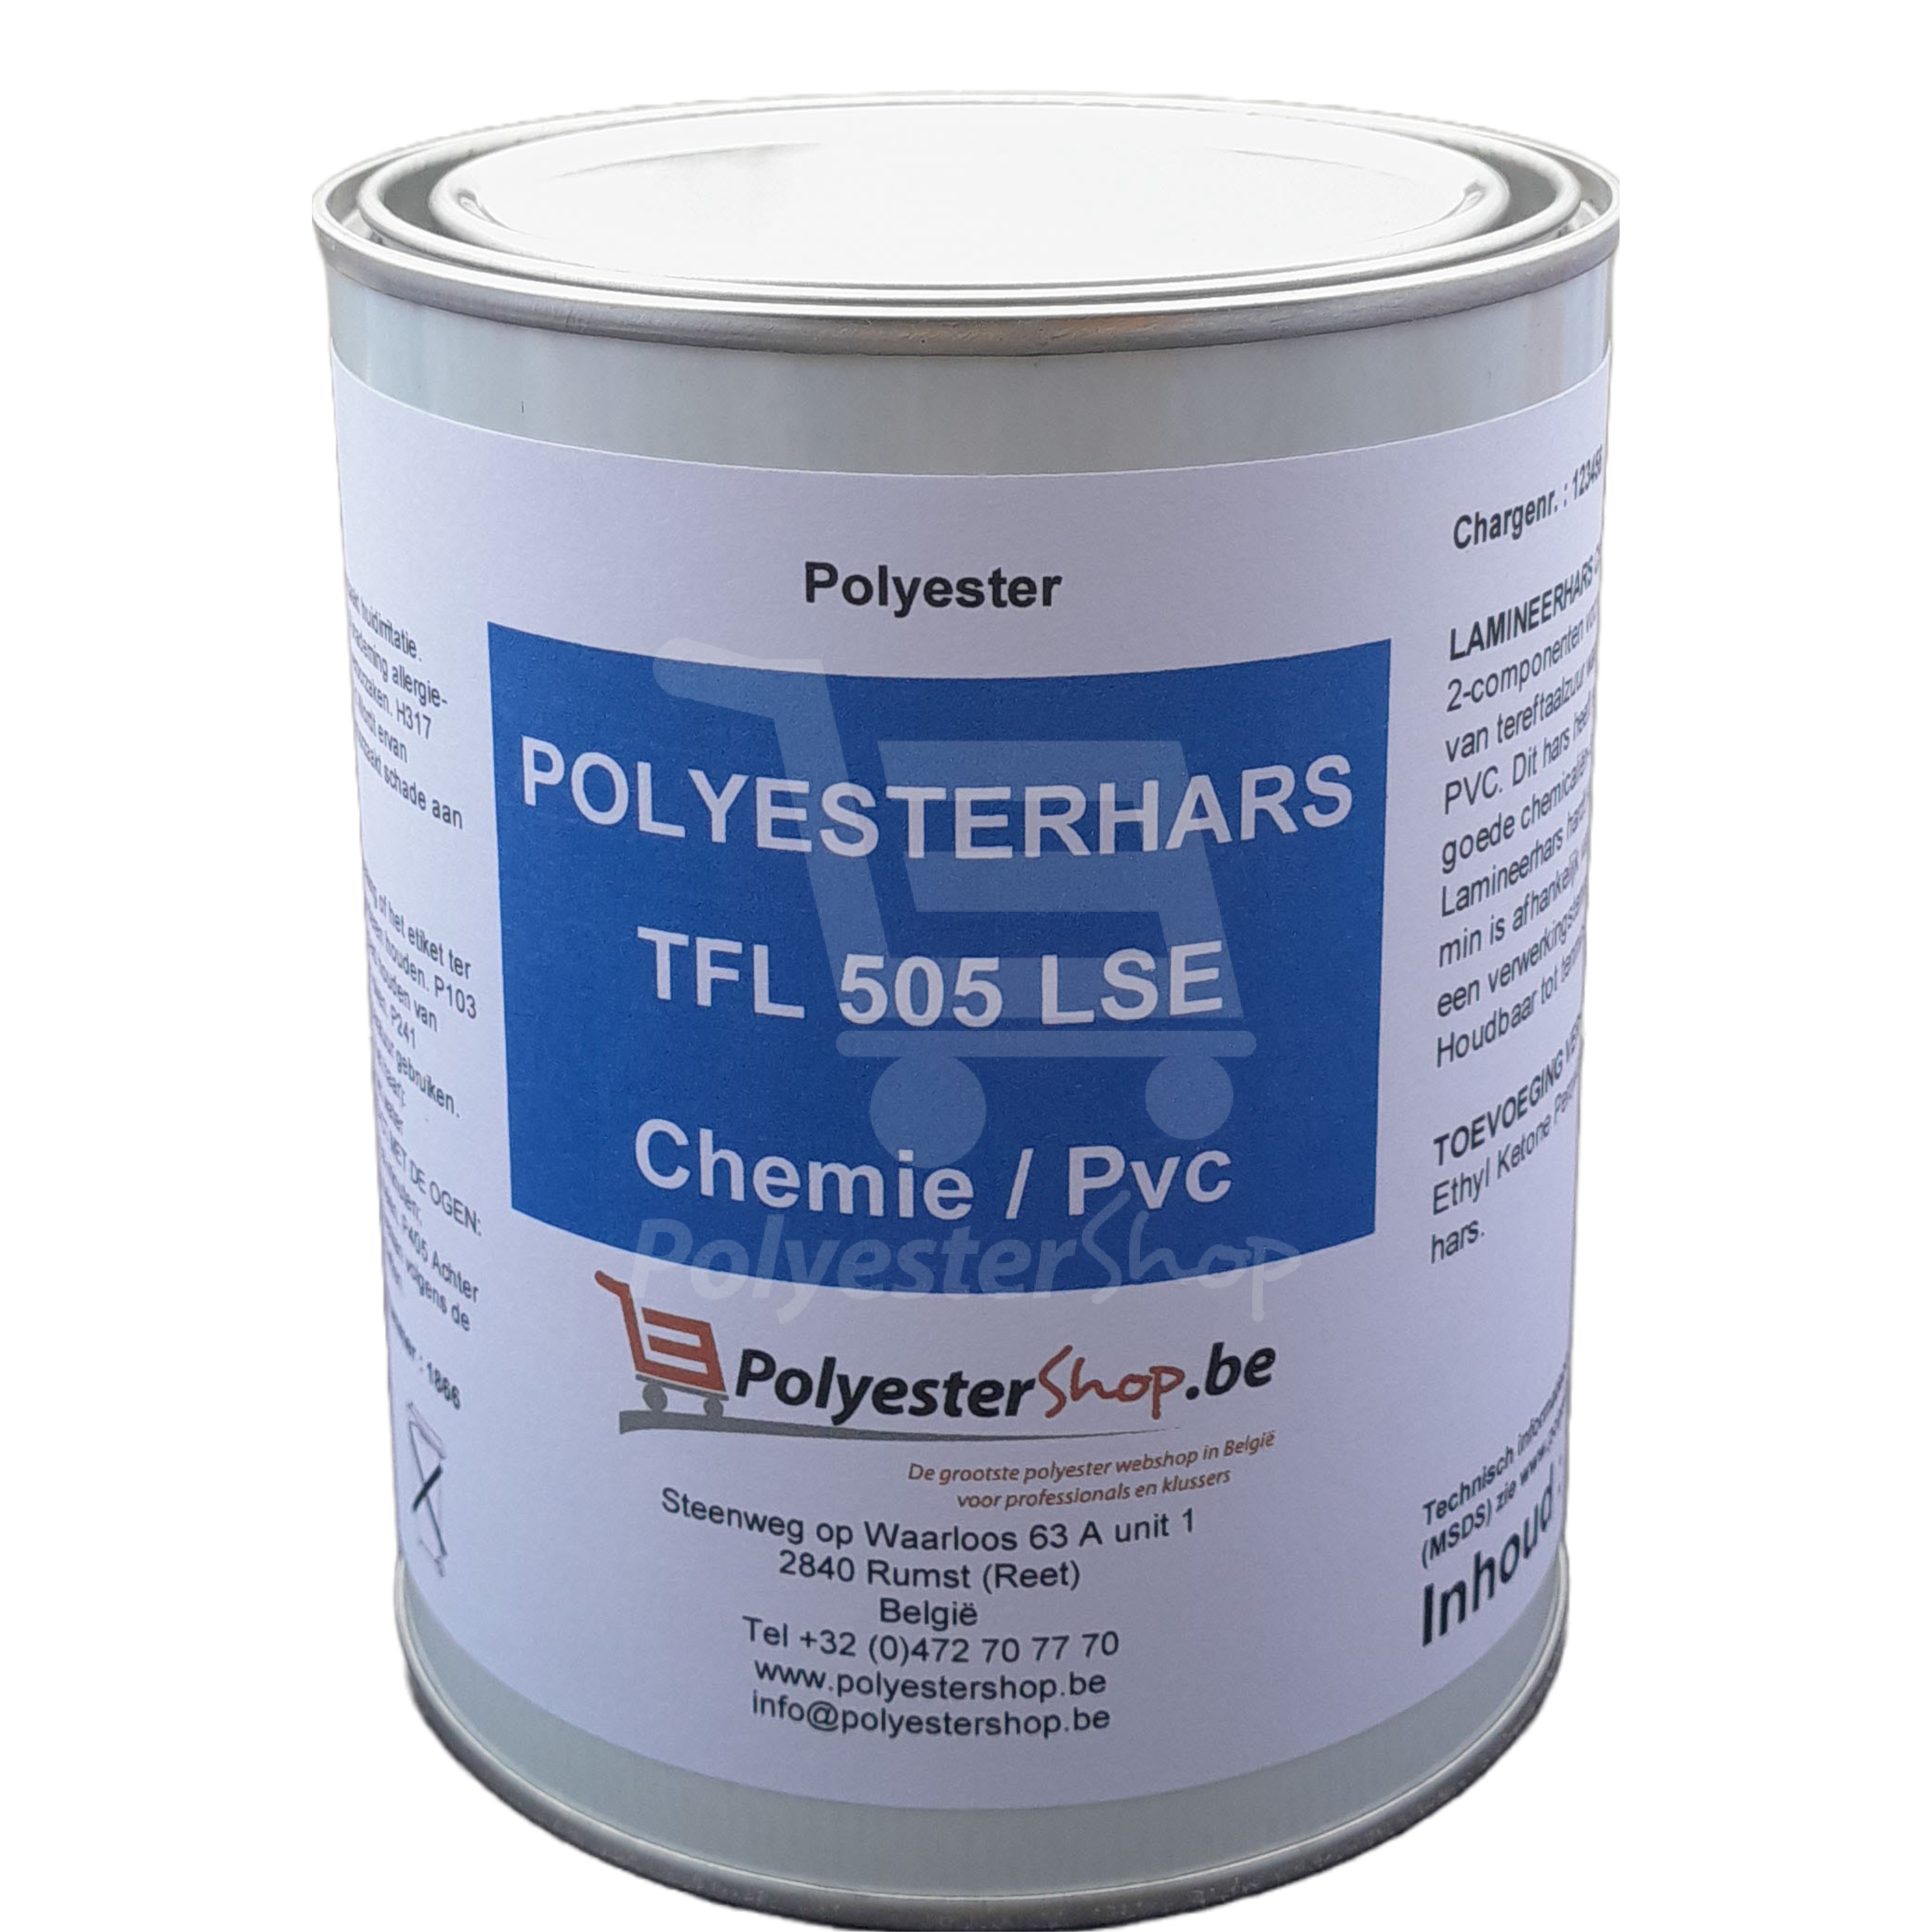 Polyester Lamineerhars, Chemie / PVC (ISO NPG 505 LSE)